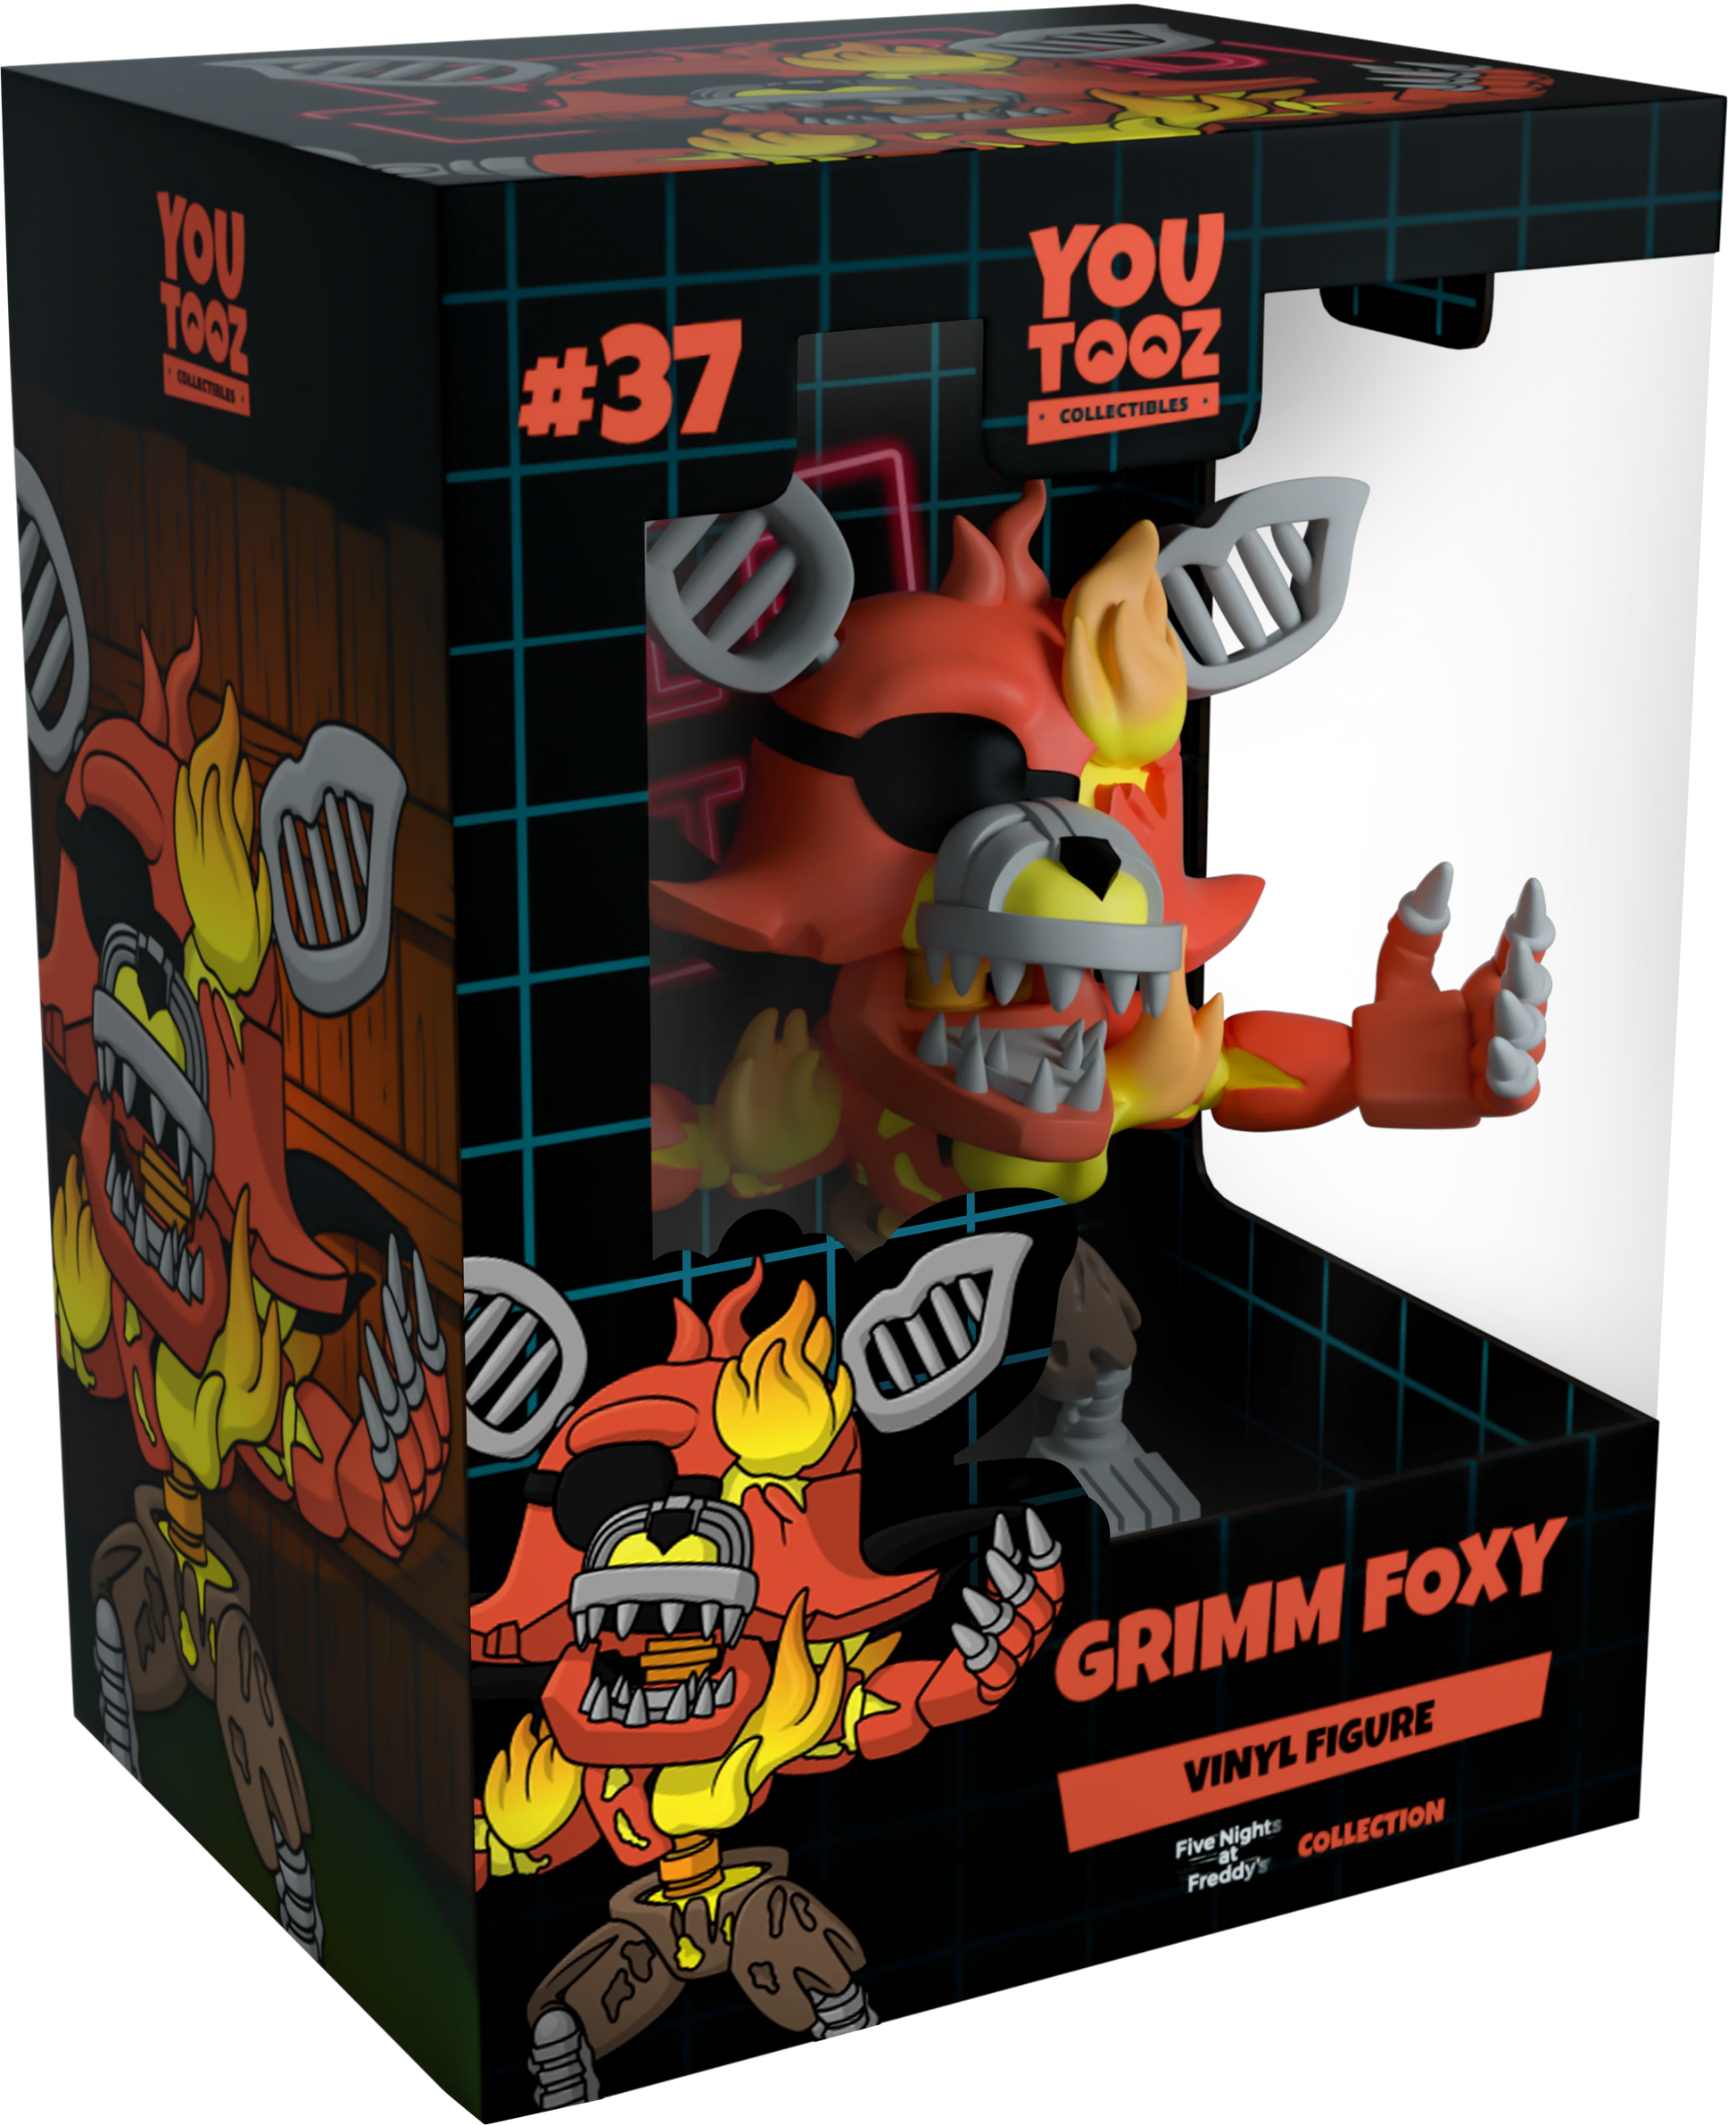 Five Nights at Freddy's Vinyl figurine Grimm Foxy Youtooz FNAF